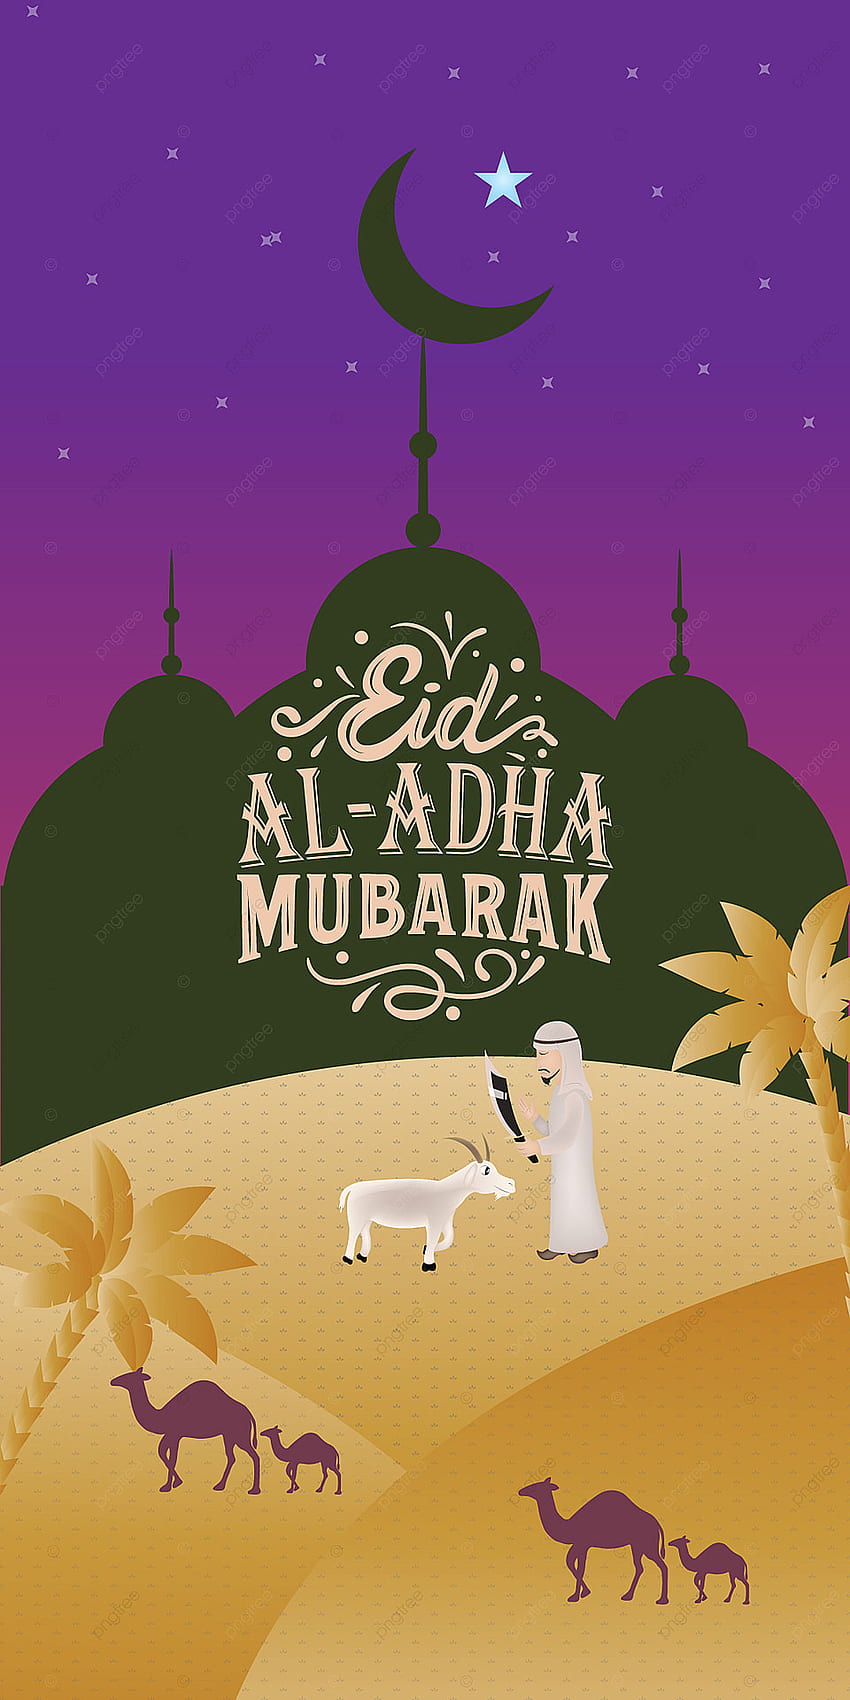 Page 4 - Free and customizable eid mubarak templates